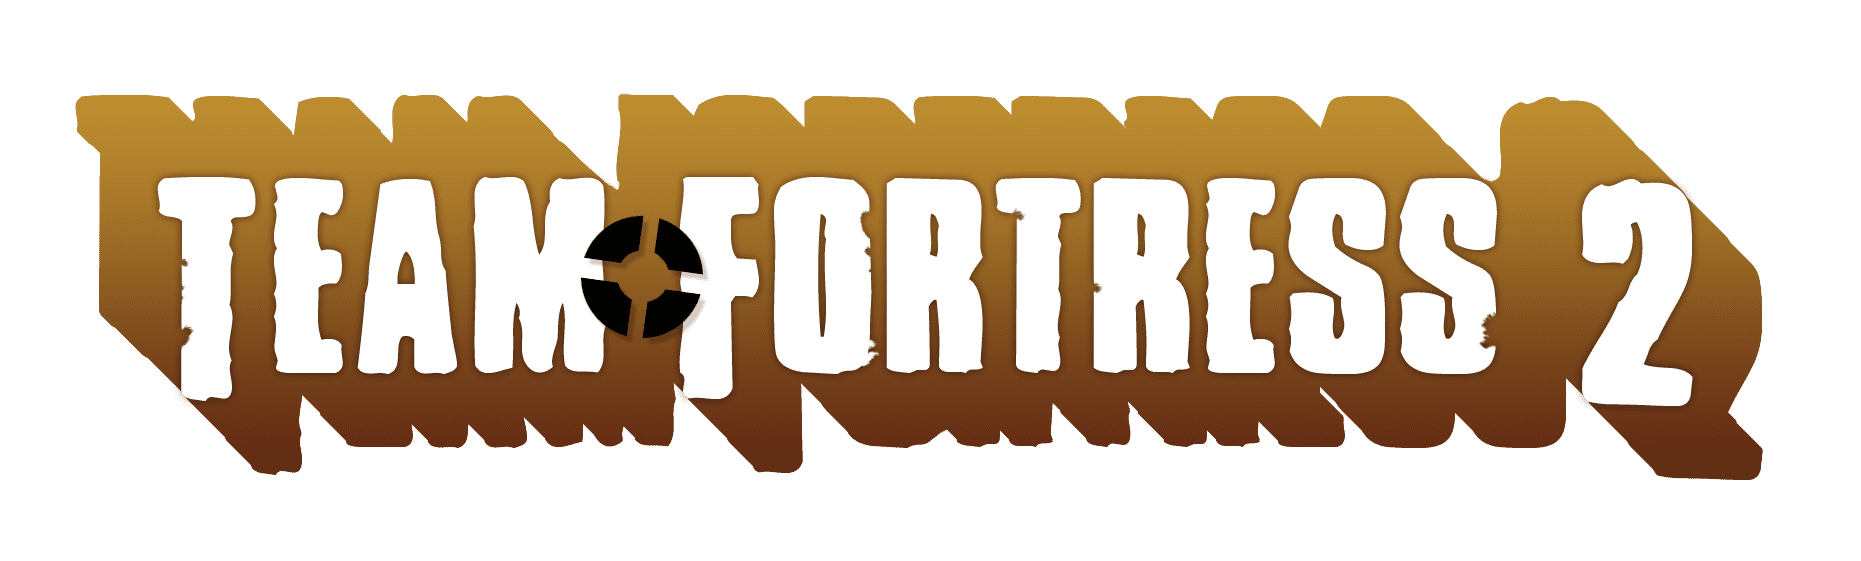 Team Fortress 2 Logo Transparent Image